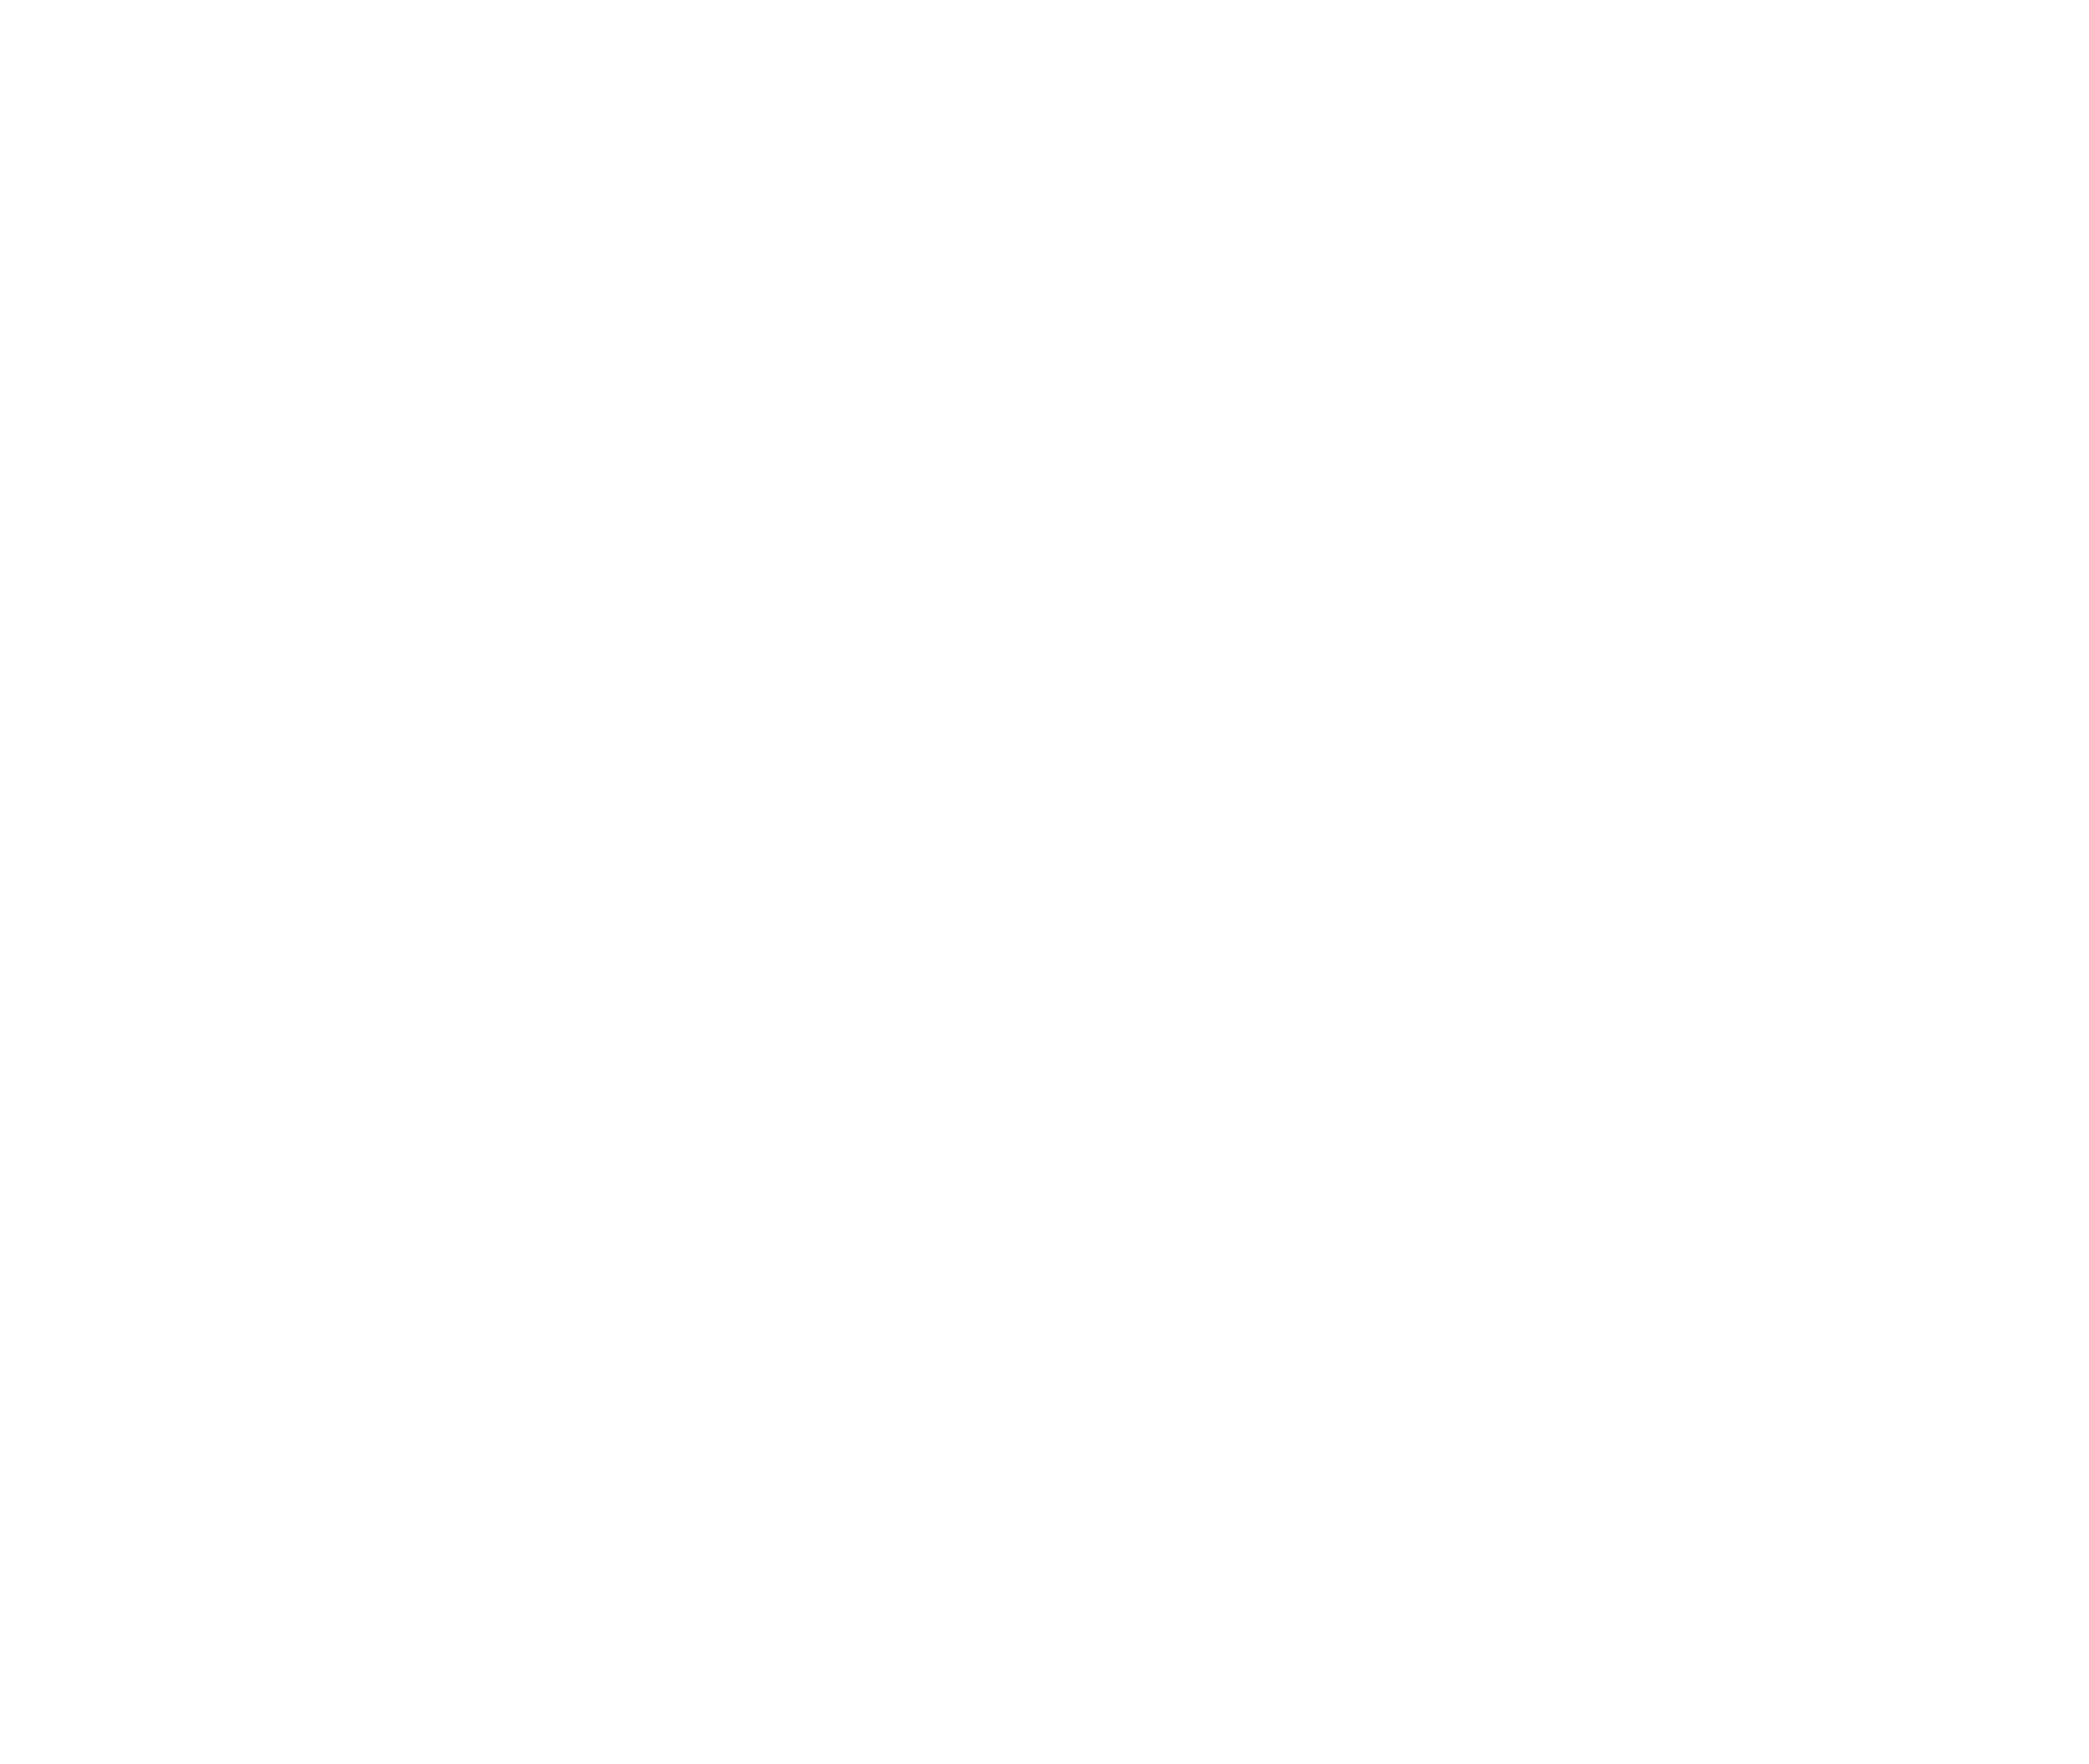 High Density diskette standard logo Clip arts